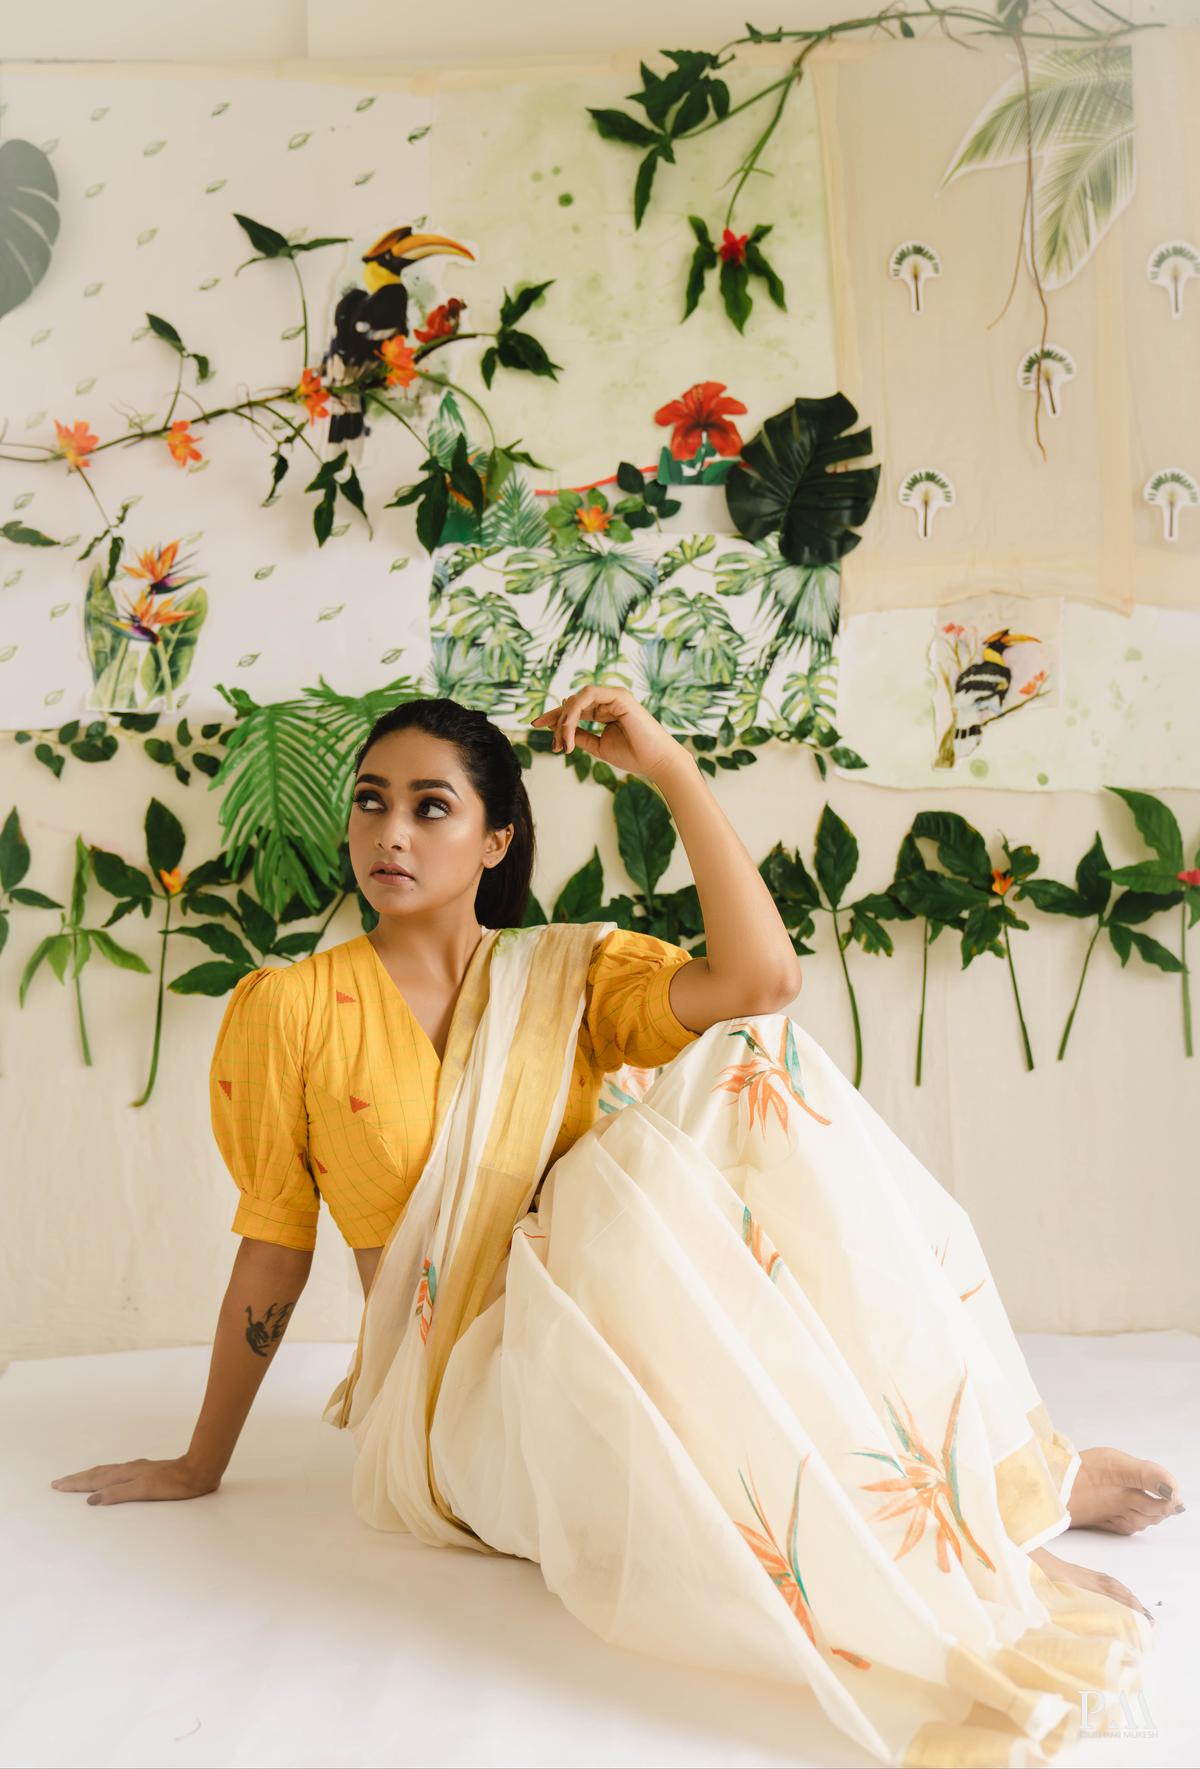  Blossoms painted on Kerala cotton saris is the USP of Nivethitha Sanjay’s brand Turmerik 